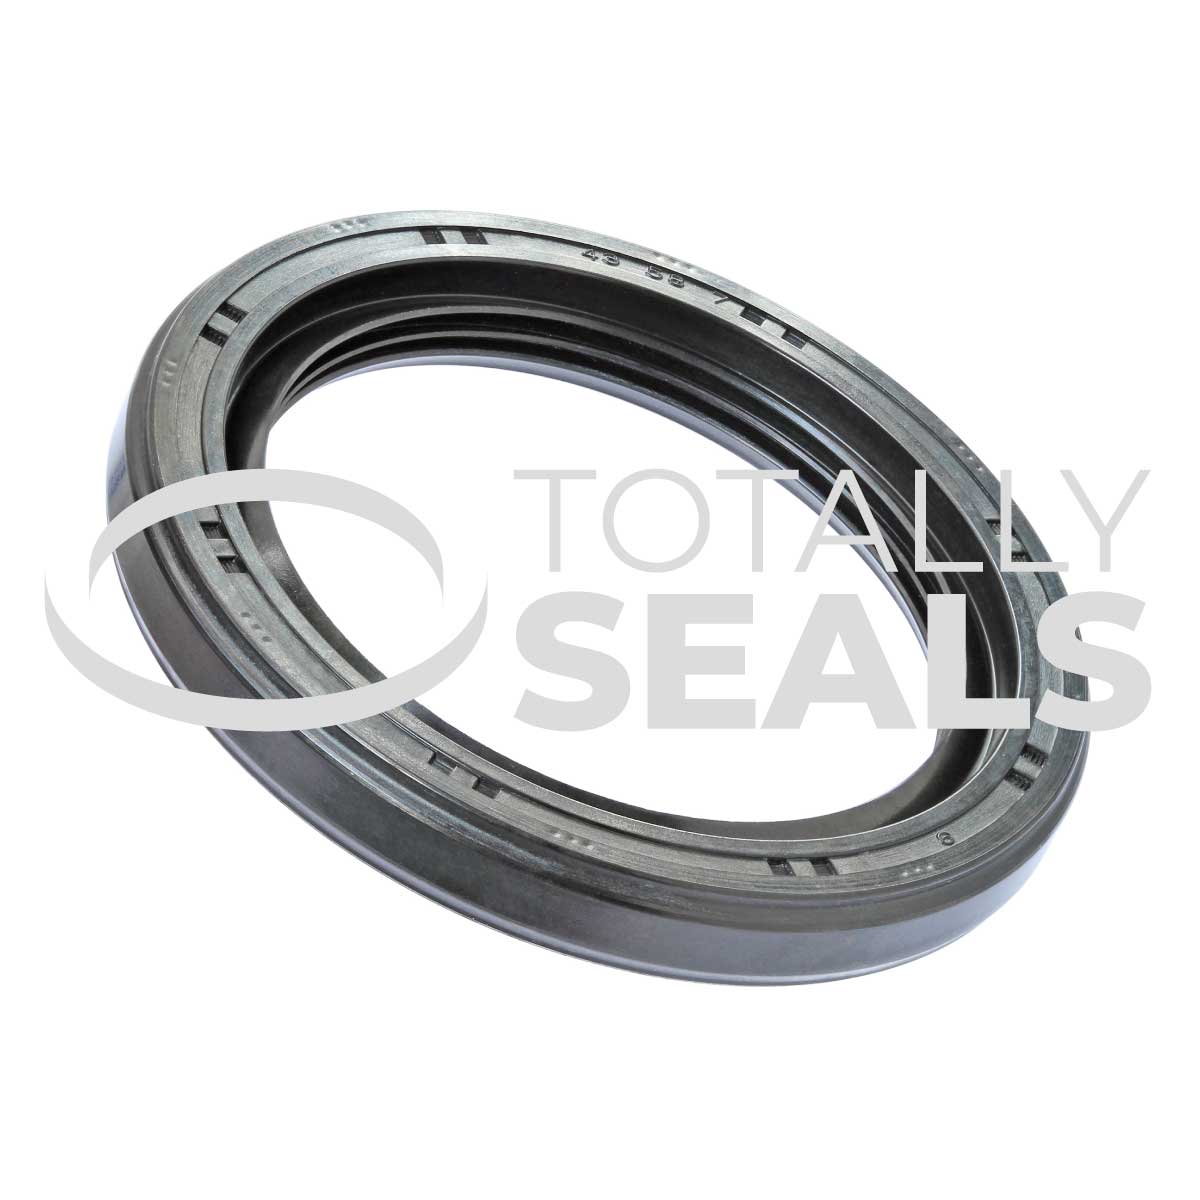 10mm x 26mm x 7mm - R23 (TC) Oil Seal - Totally Seals®